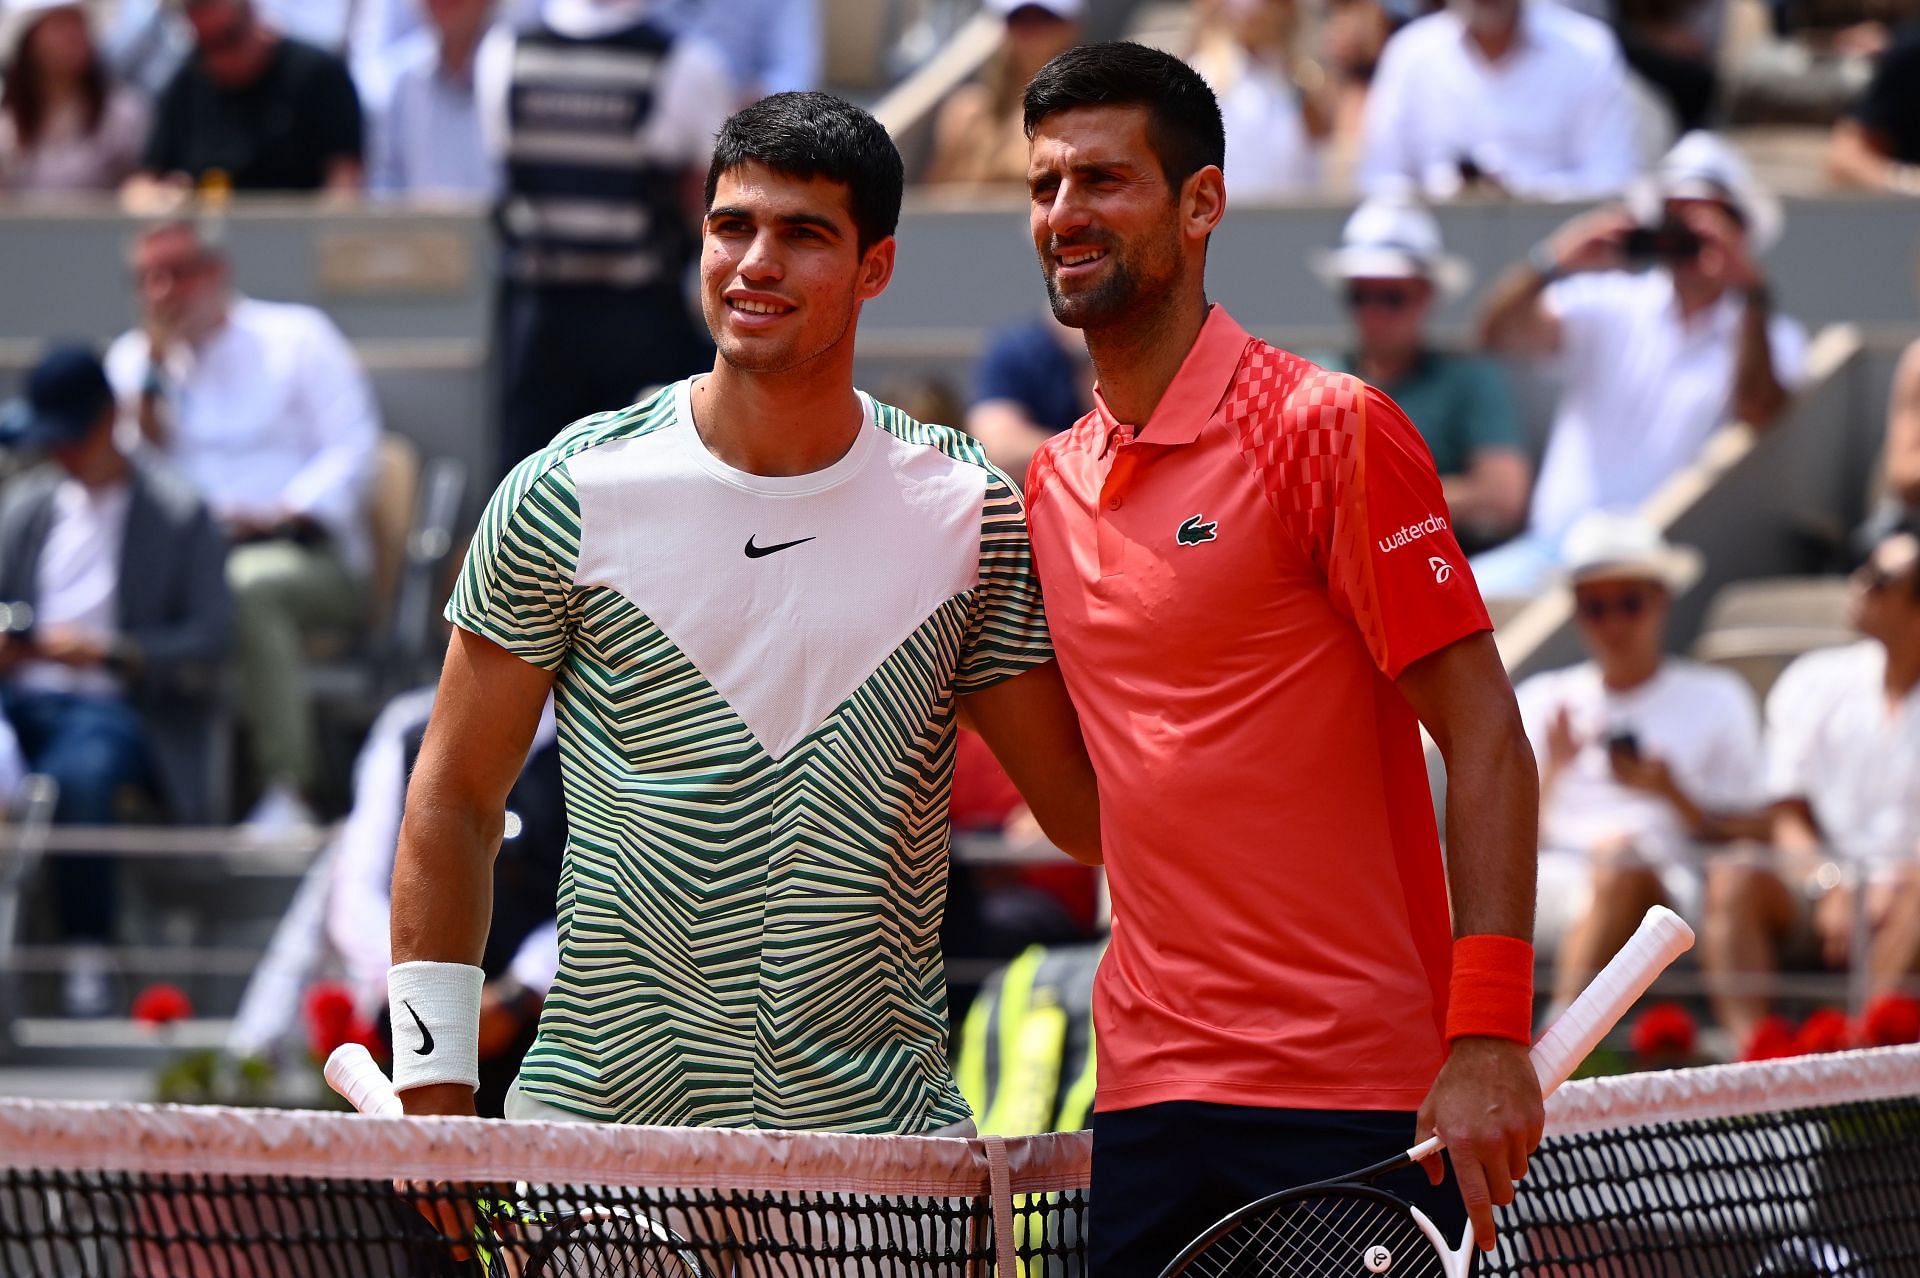 Alcaraz (left) and Djokovic